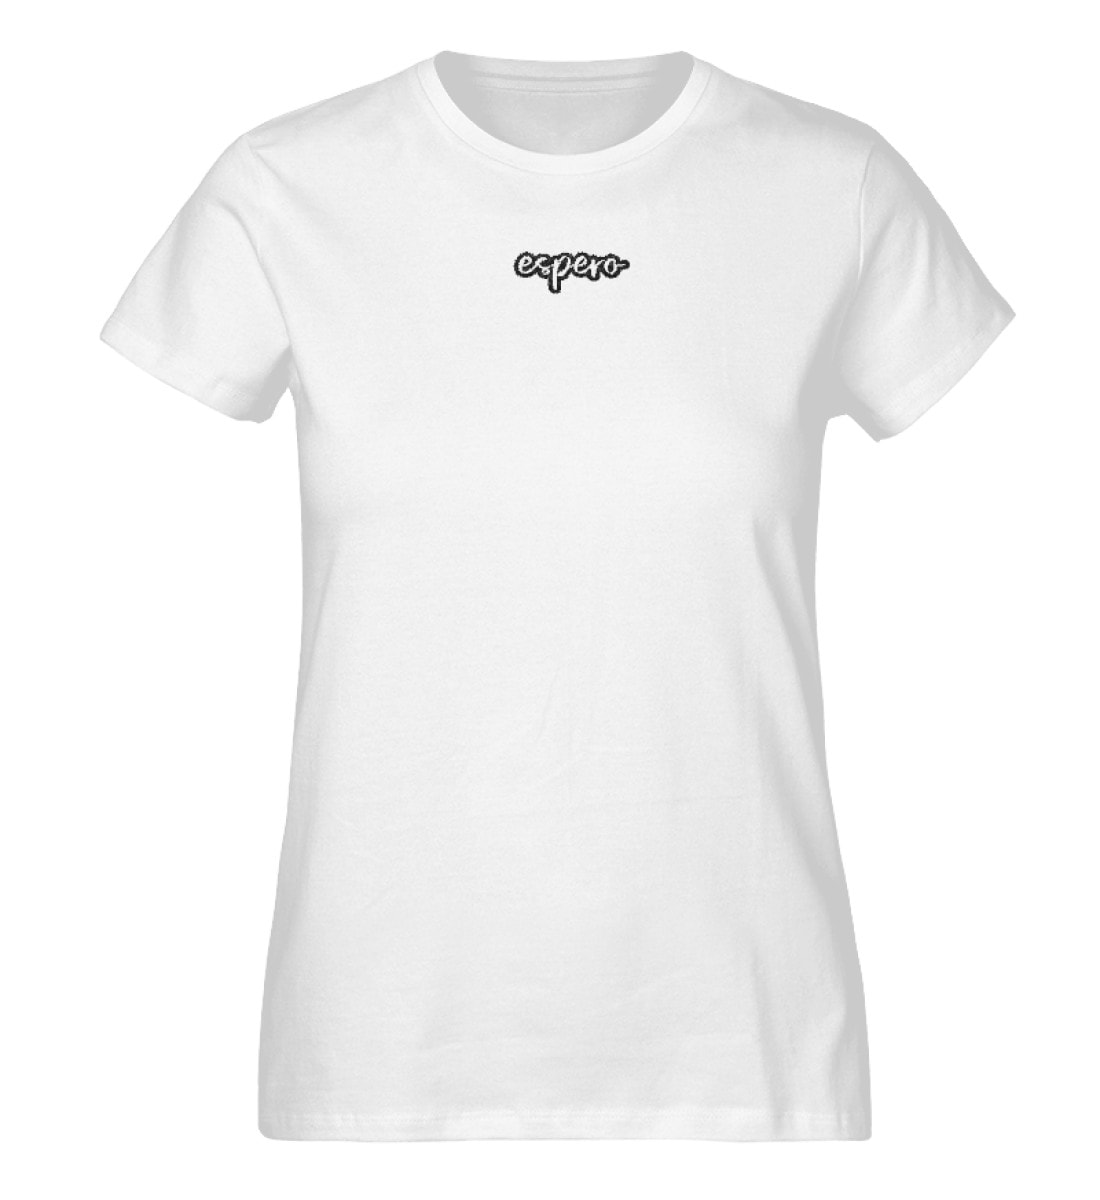 Damenshirt espero Stick Weiß - Damen Premium Organic Shirt mit Stick-3